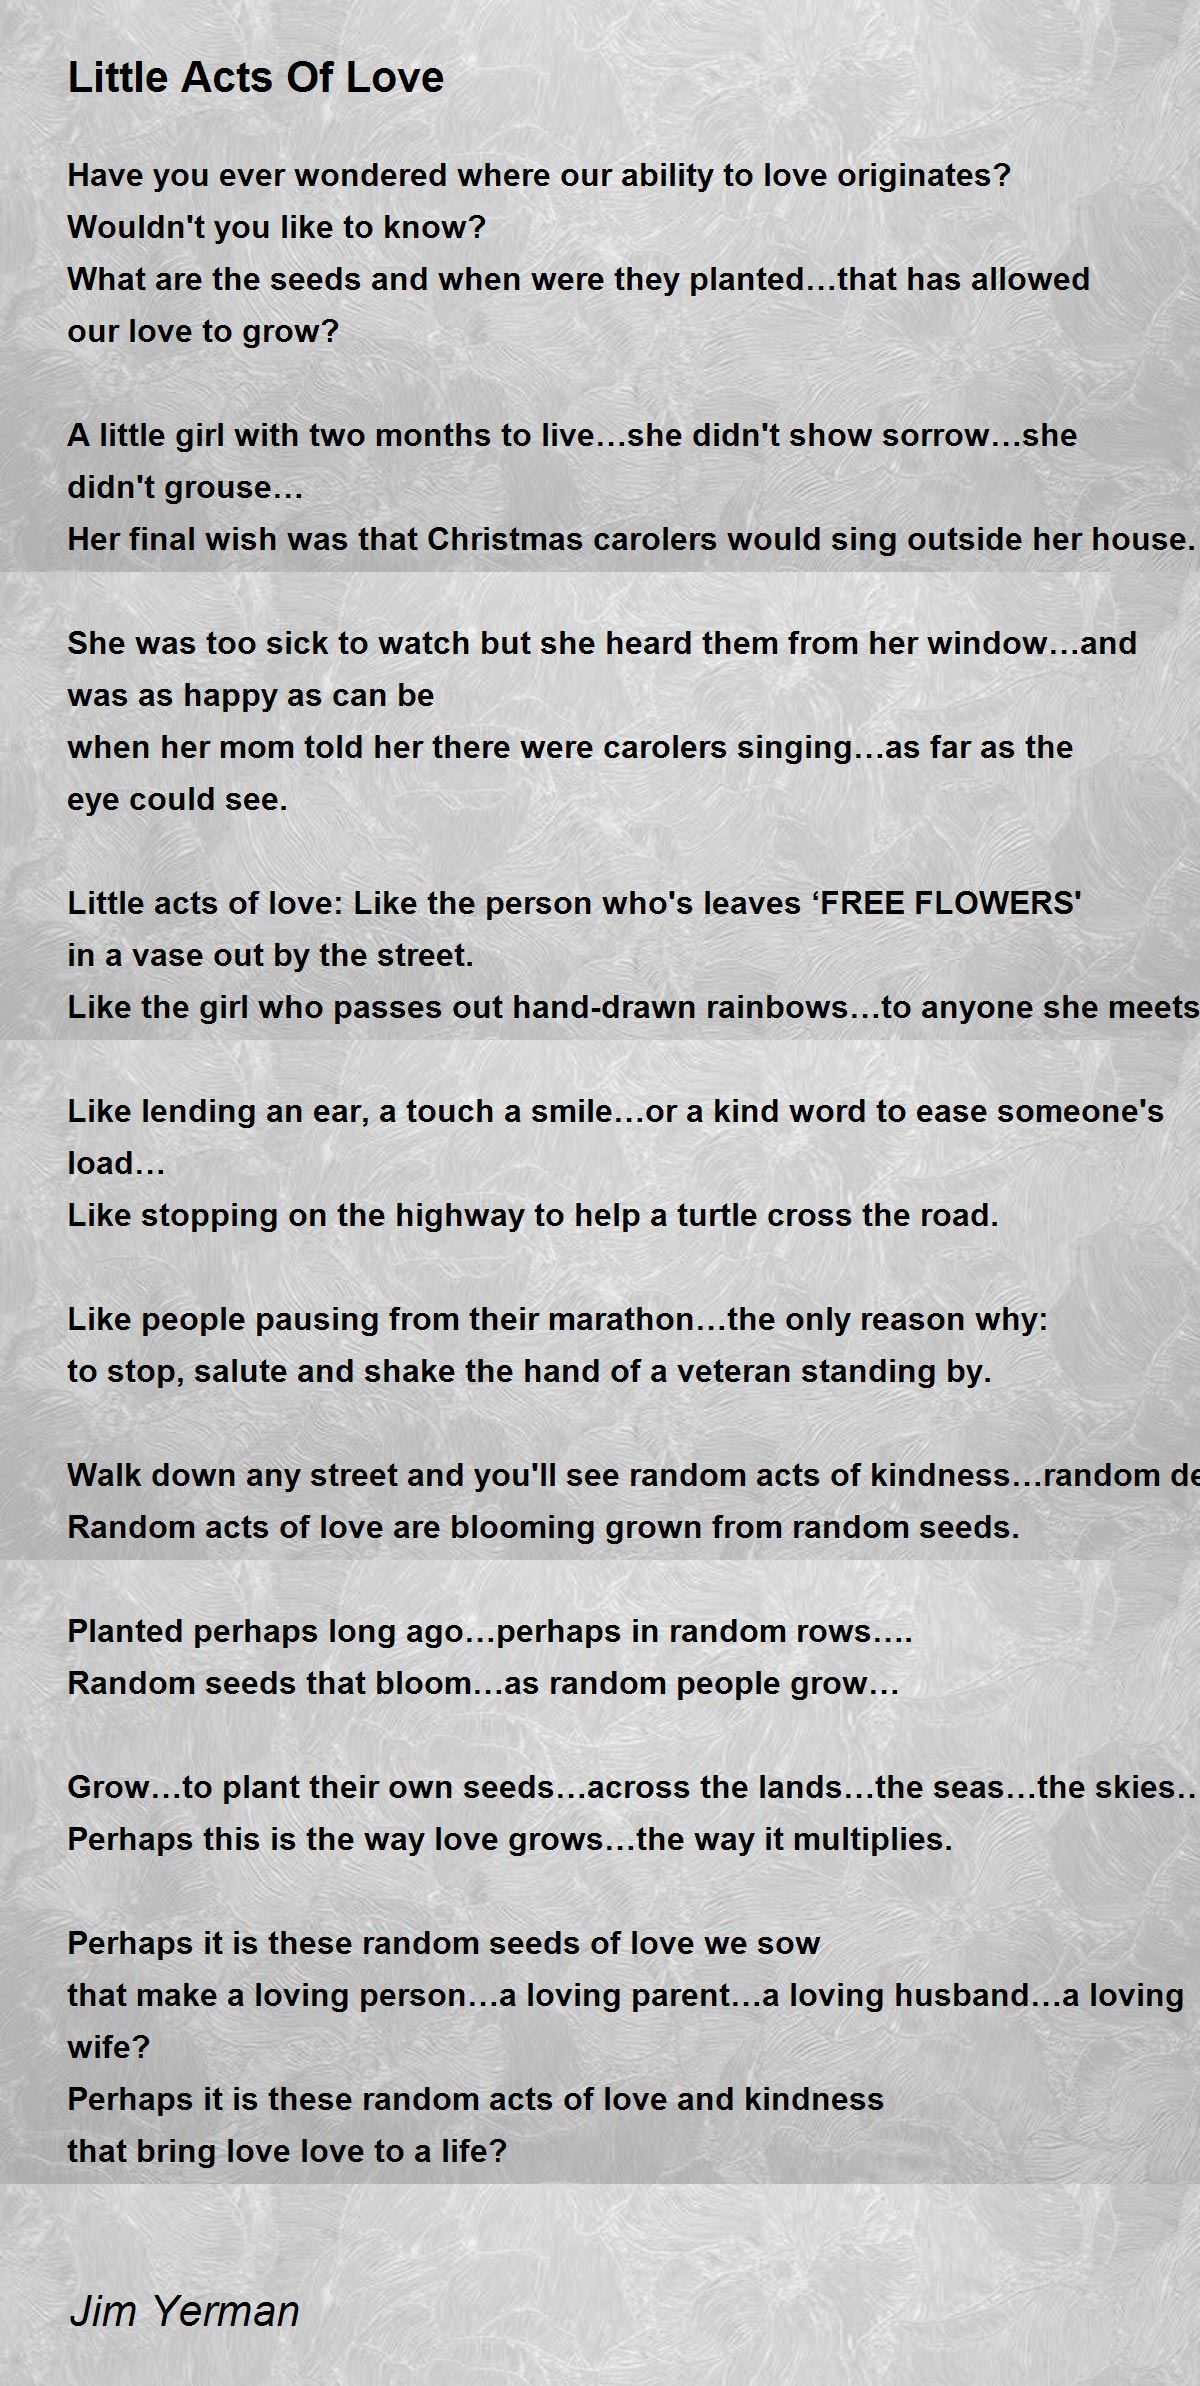 Little Acts Of Love Poem by Jim Yerman - Poem Hunter